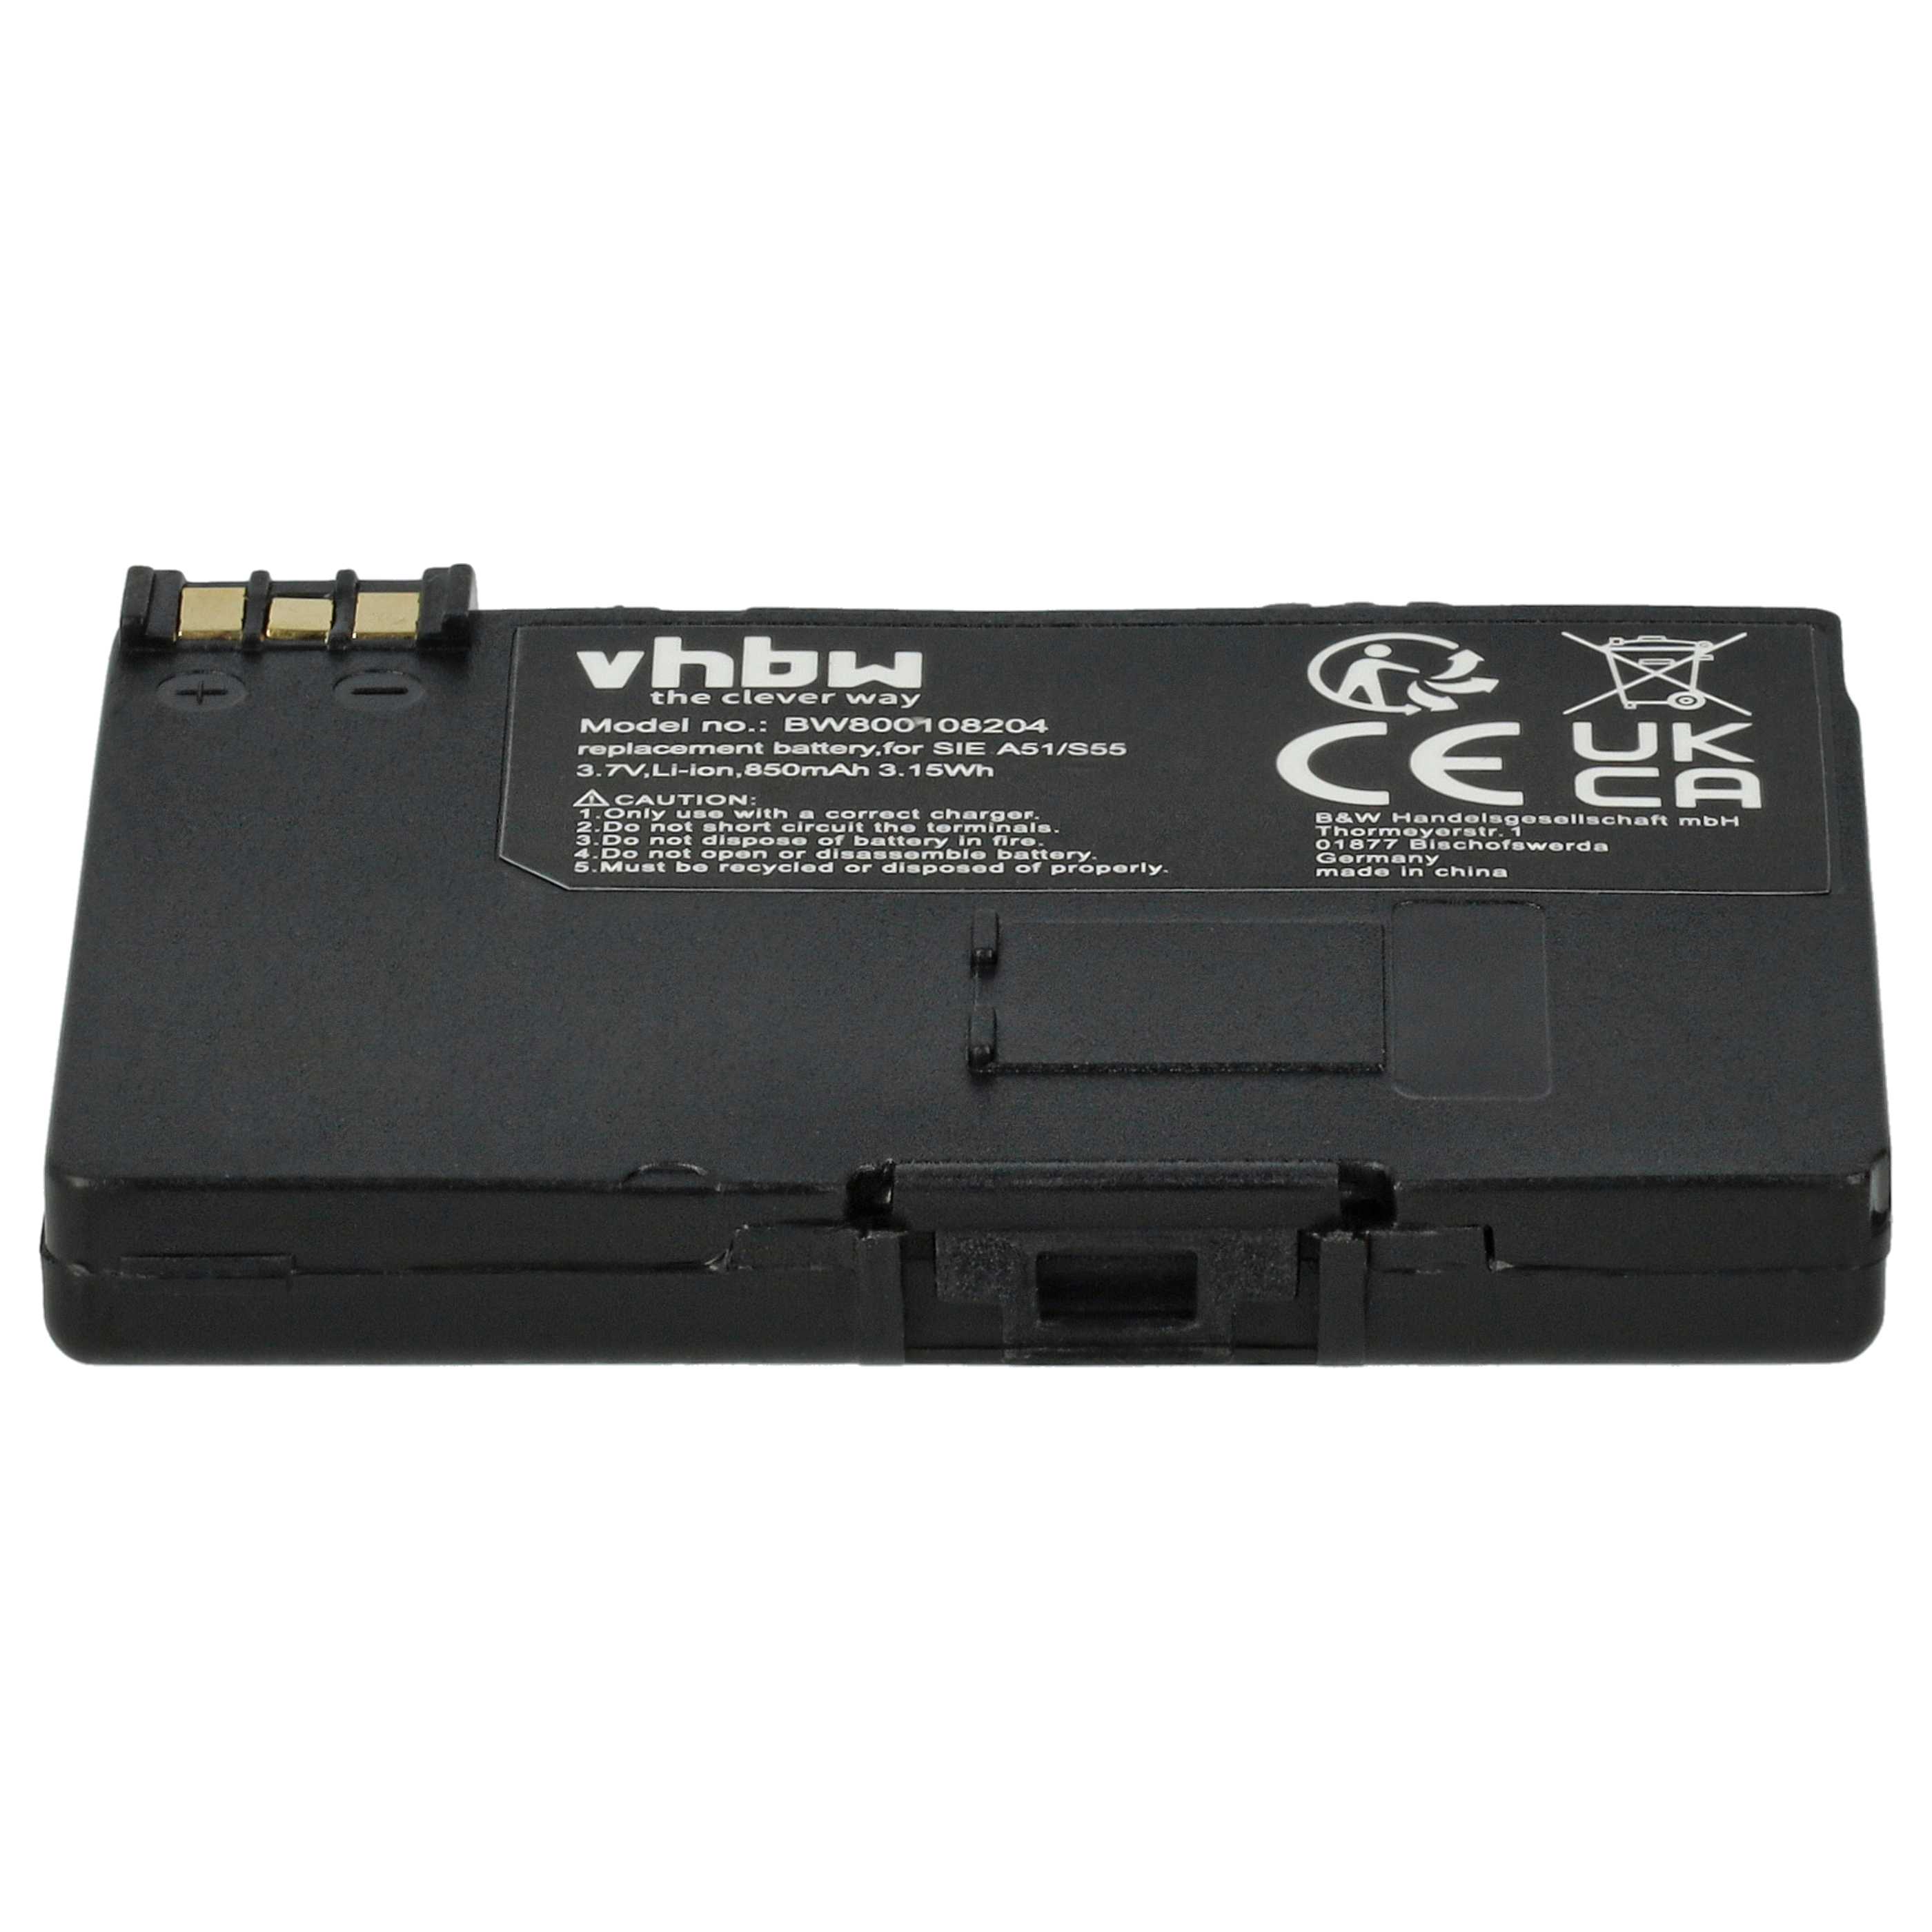 Akumulator do telefonu stacjonarnego zamiennik EBA-510, L36145-K1310-X401, BASIC56 - 850 mAh 3,7 V Li-Ion